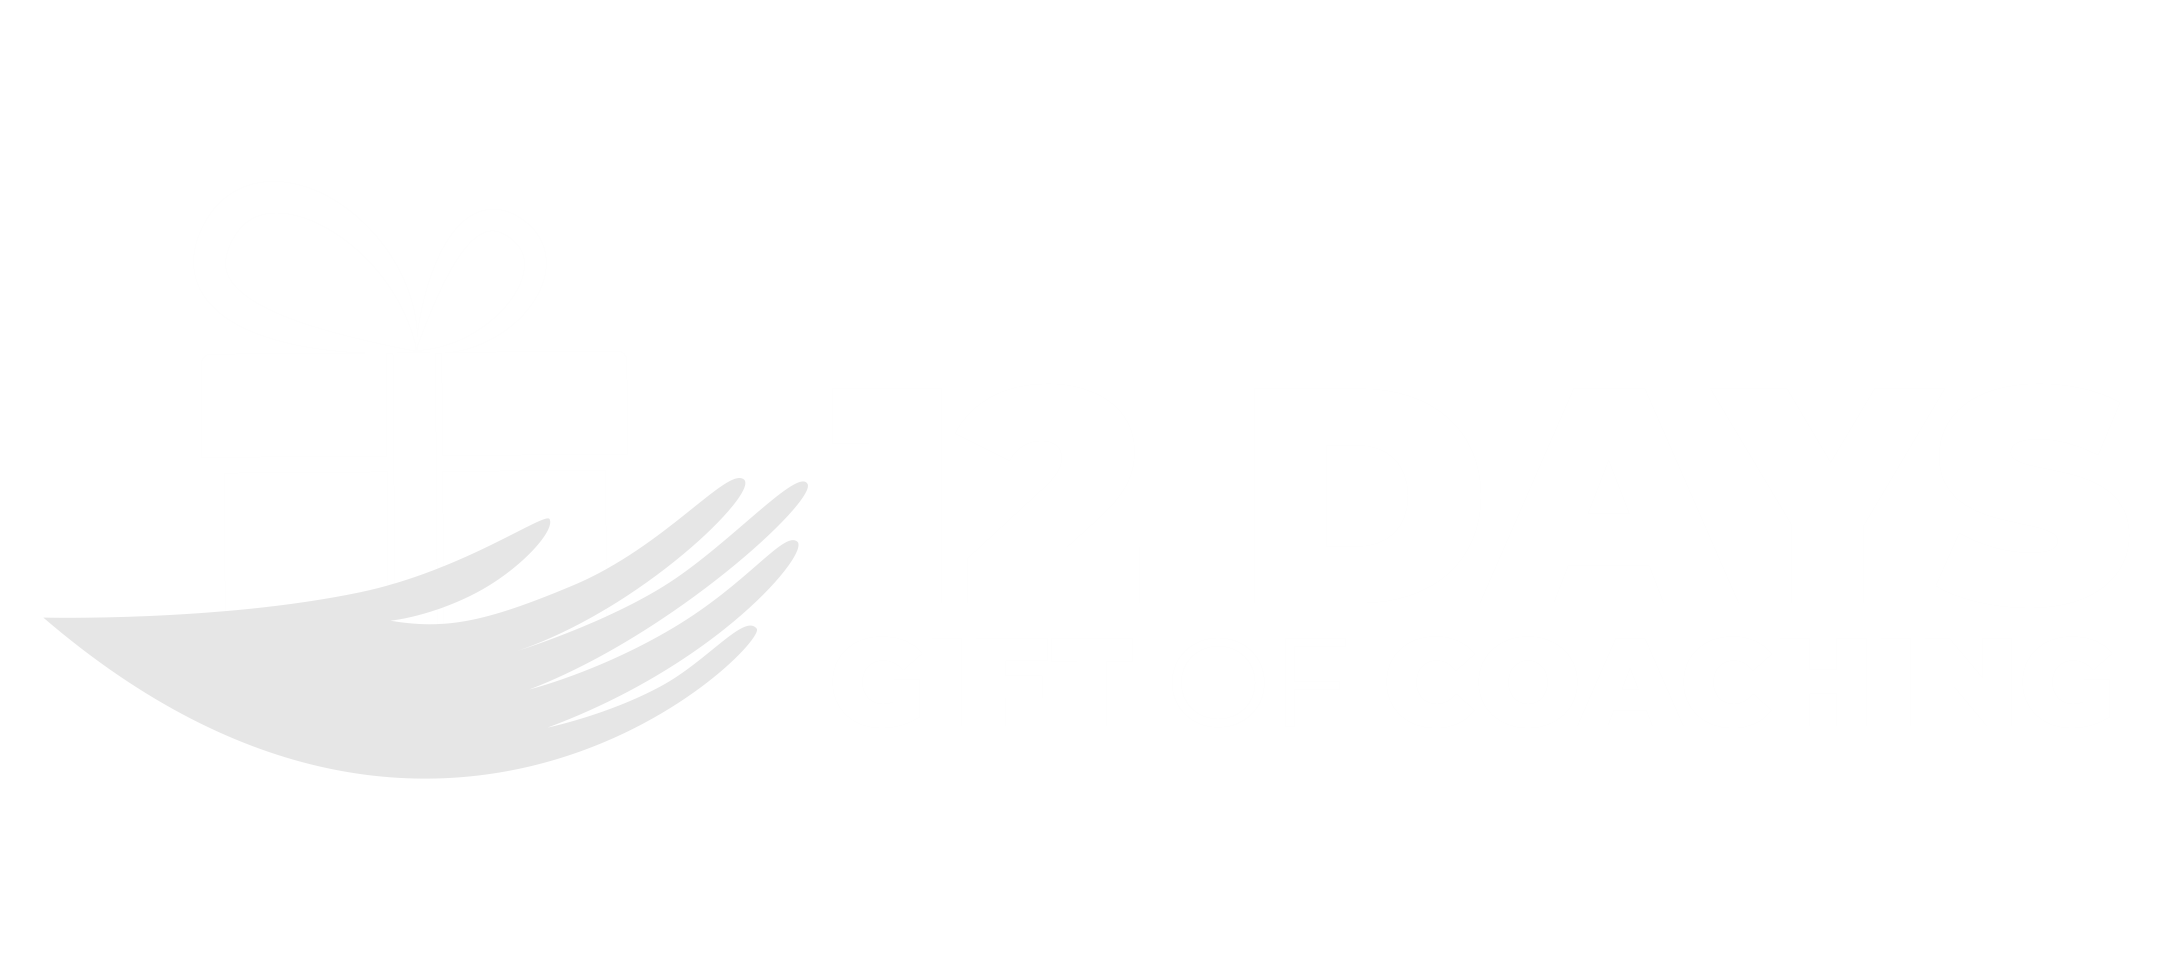 12 Days Gift of Coaching